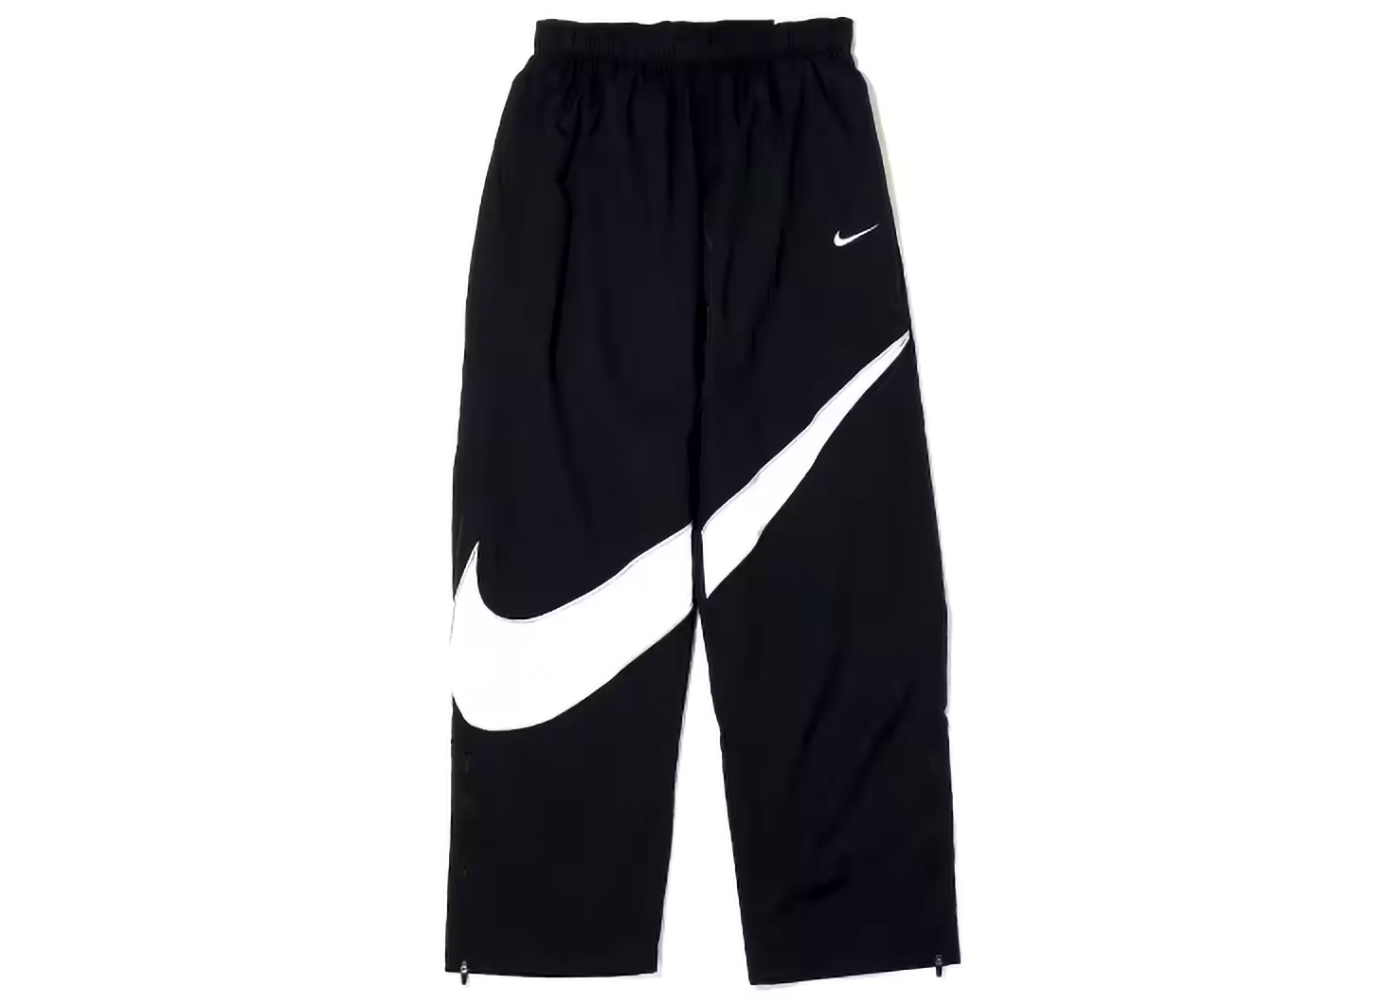 Nike Sportswear Big Swoosh Woven Pants (Asia Sizing) Black/White